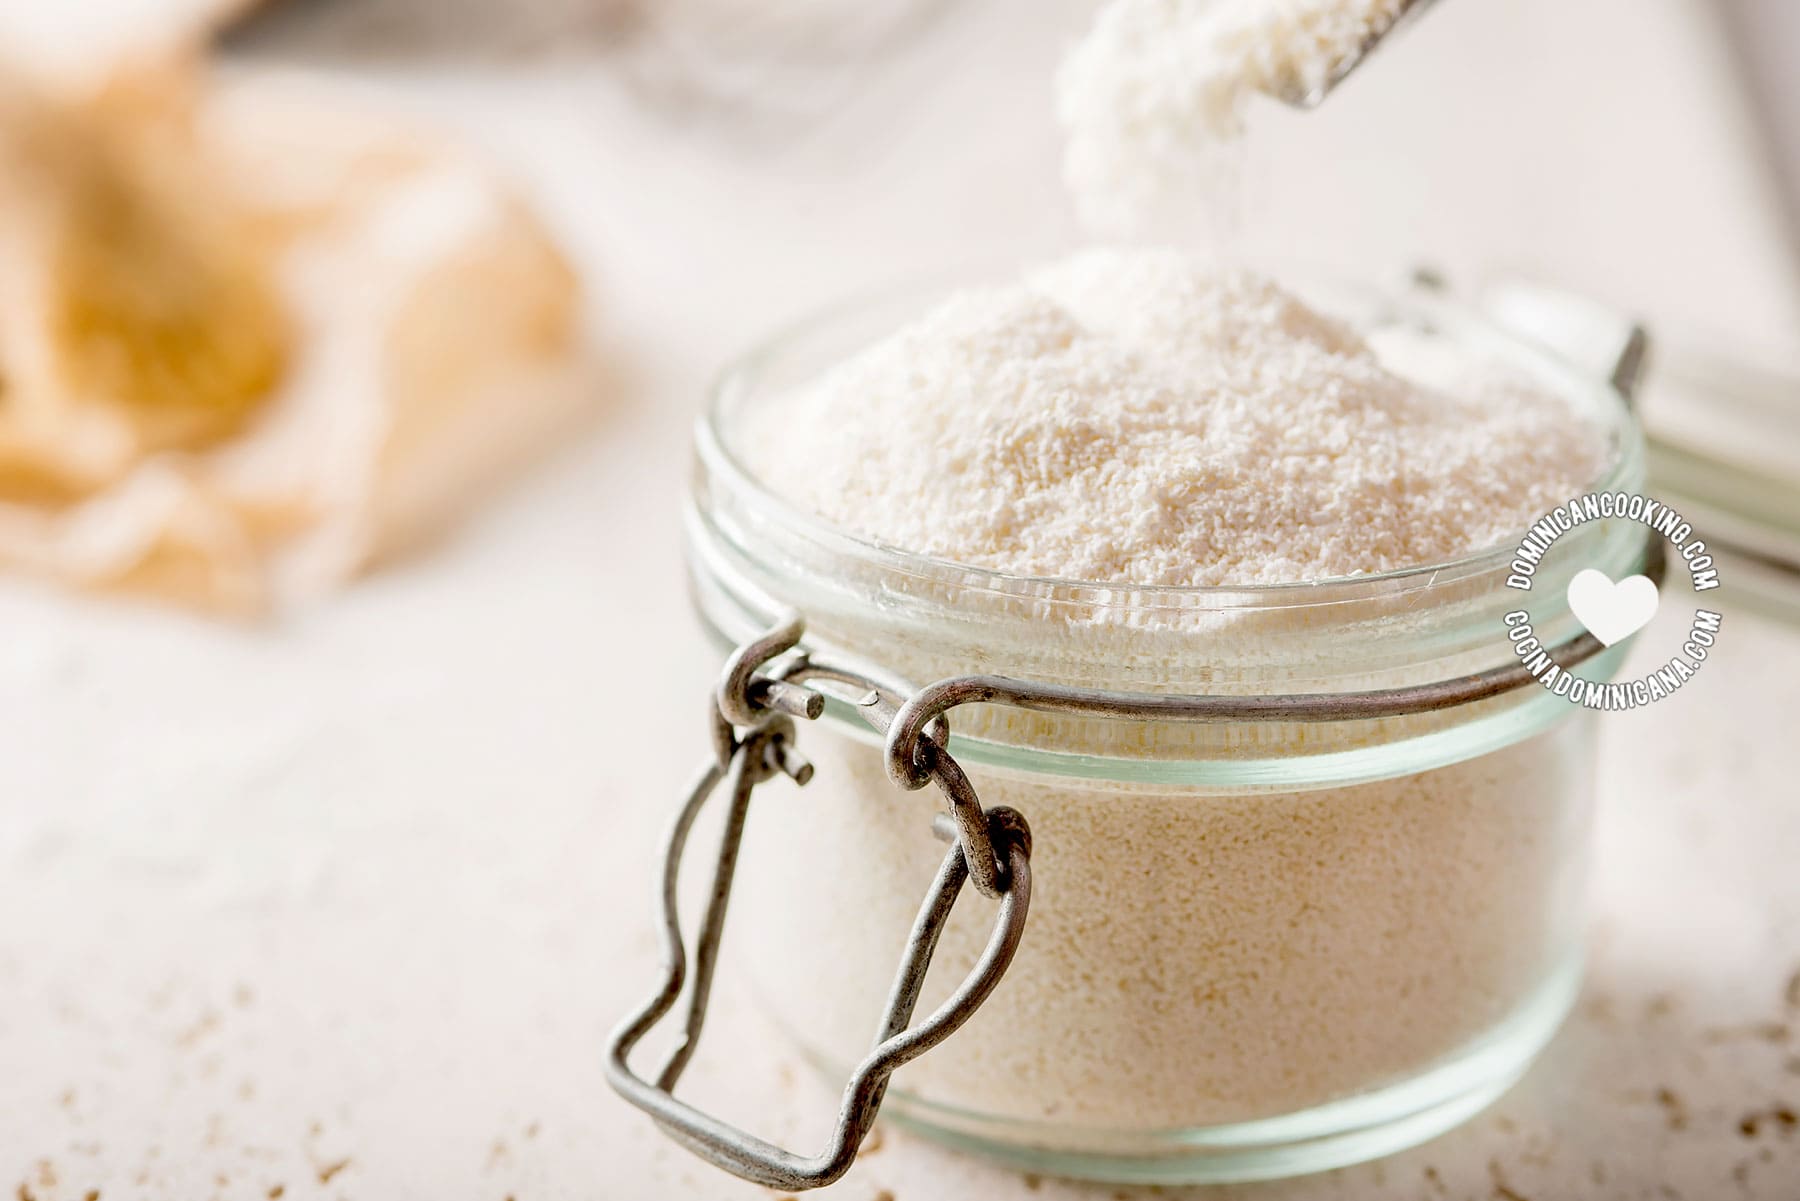 Yuca flour or cassava flour.